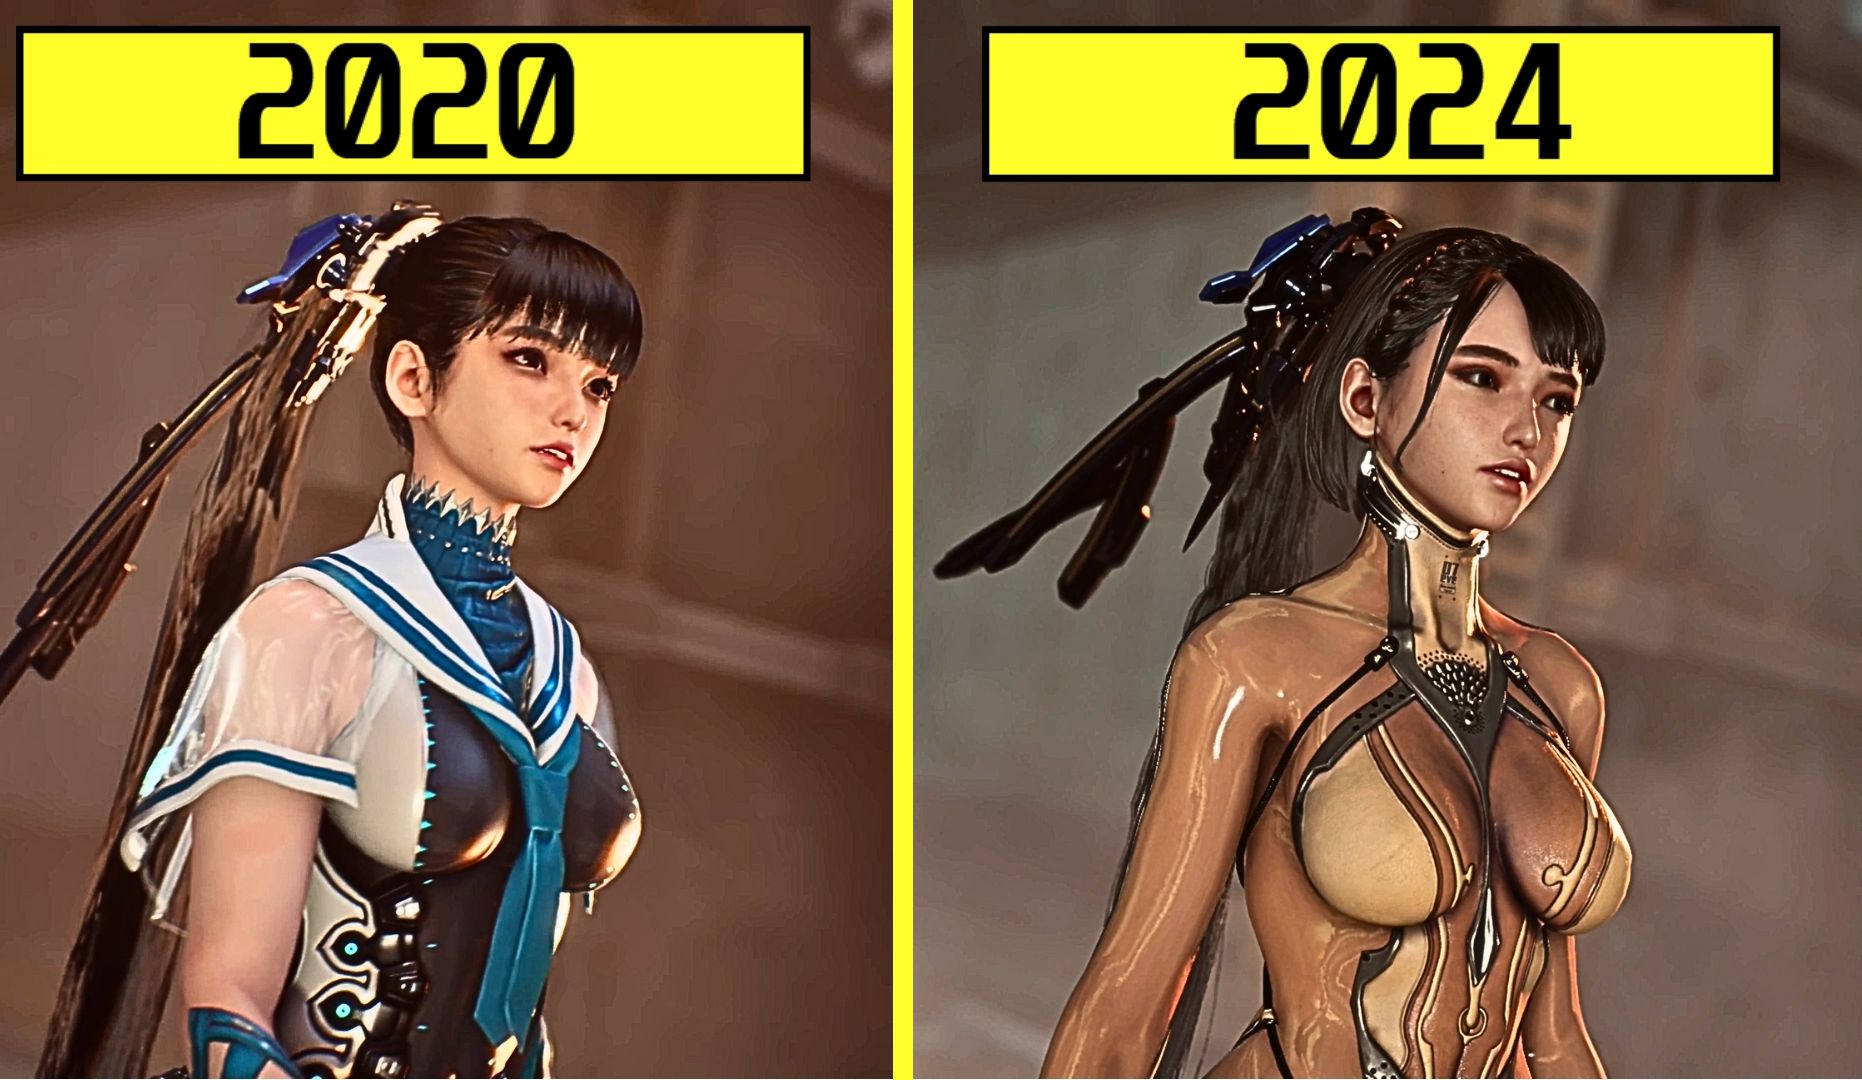 【Cycu1】《Stellar Blade》2020 年演示版与 2024 年演示版图形比较